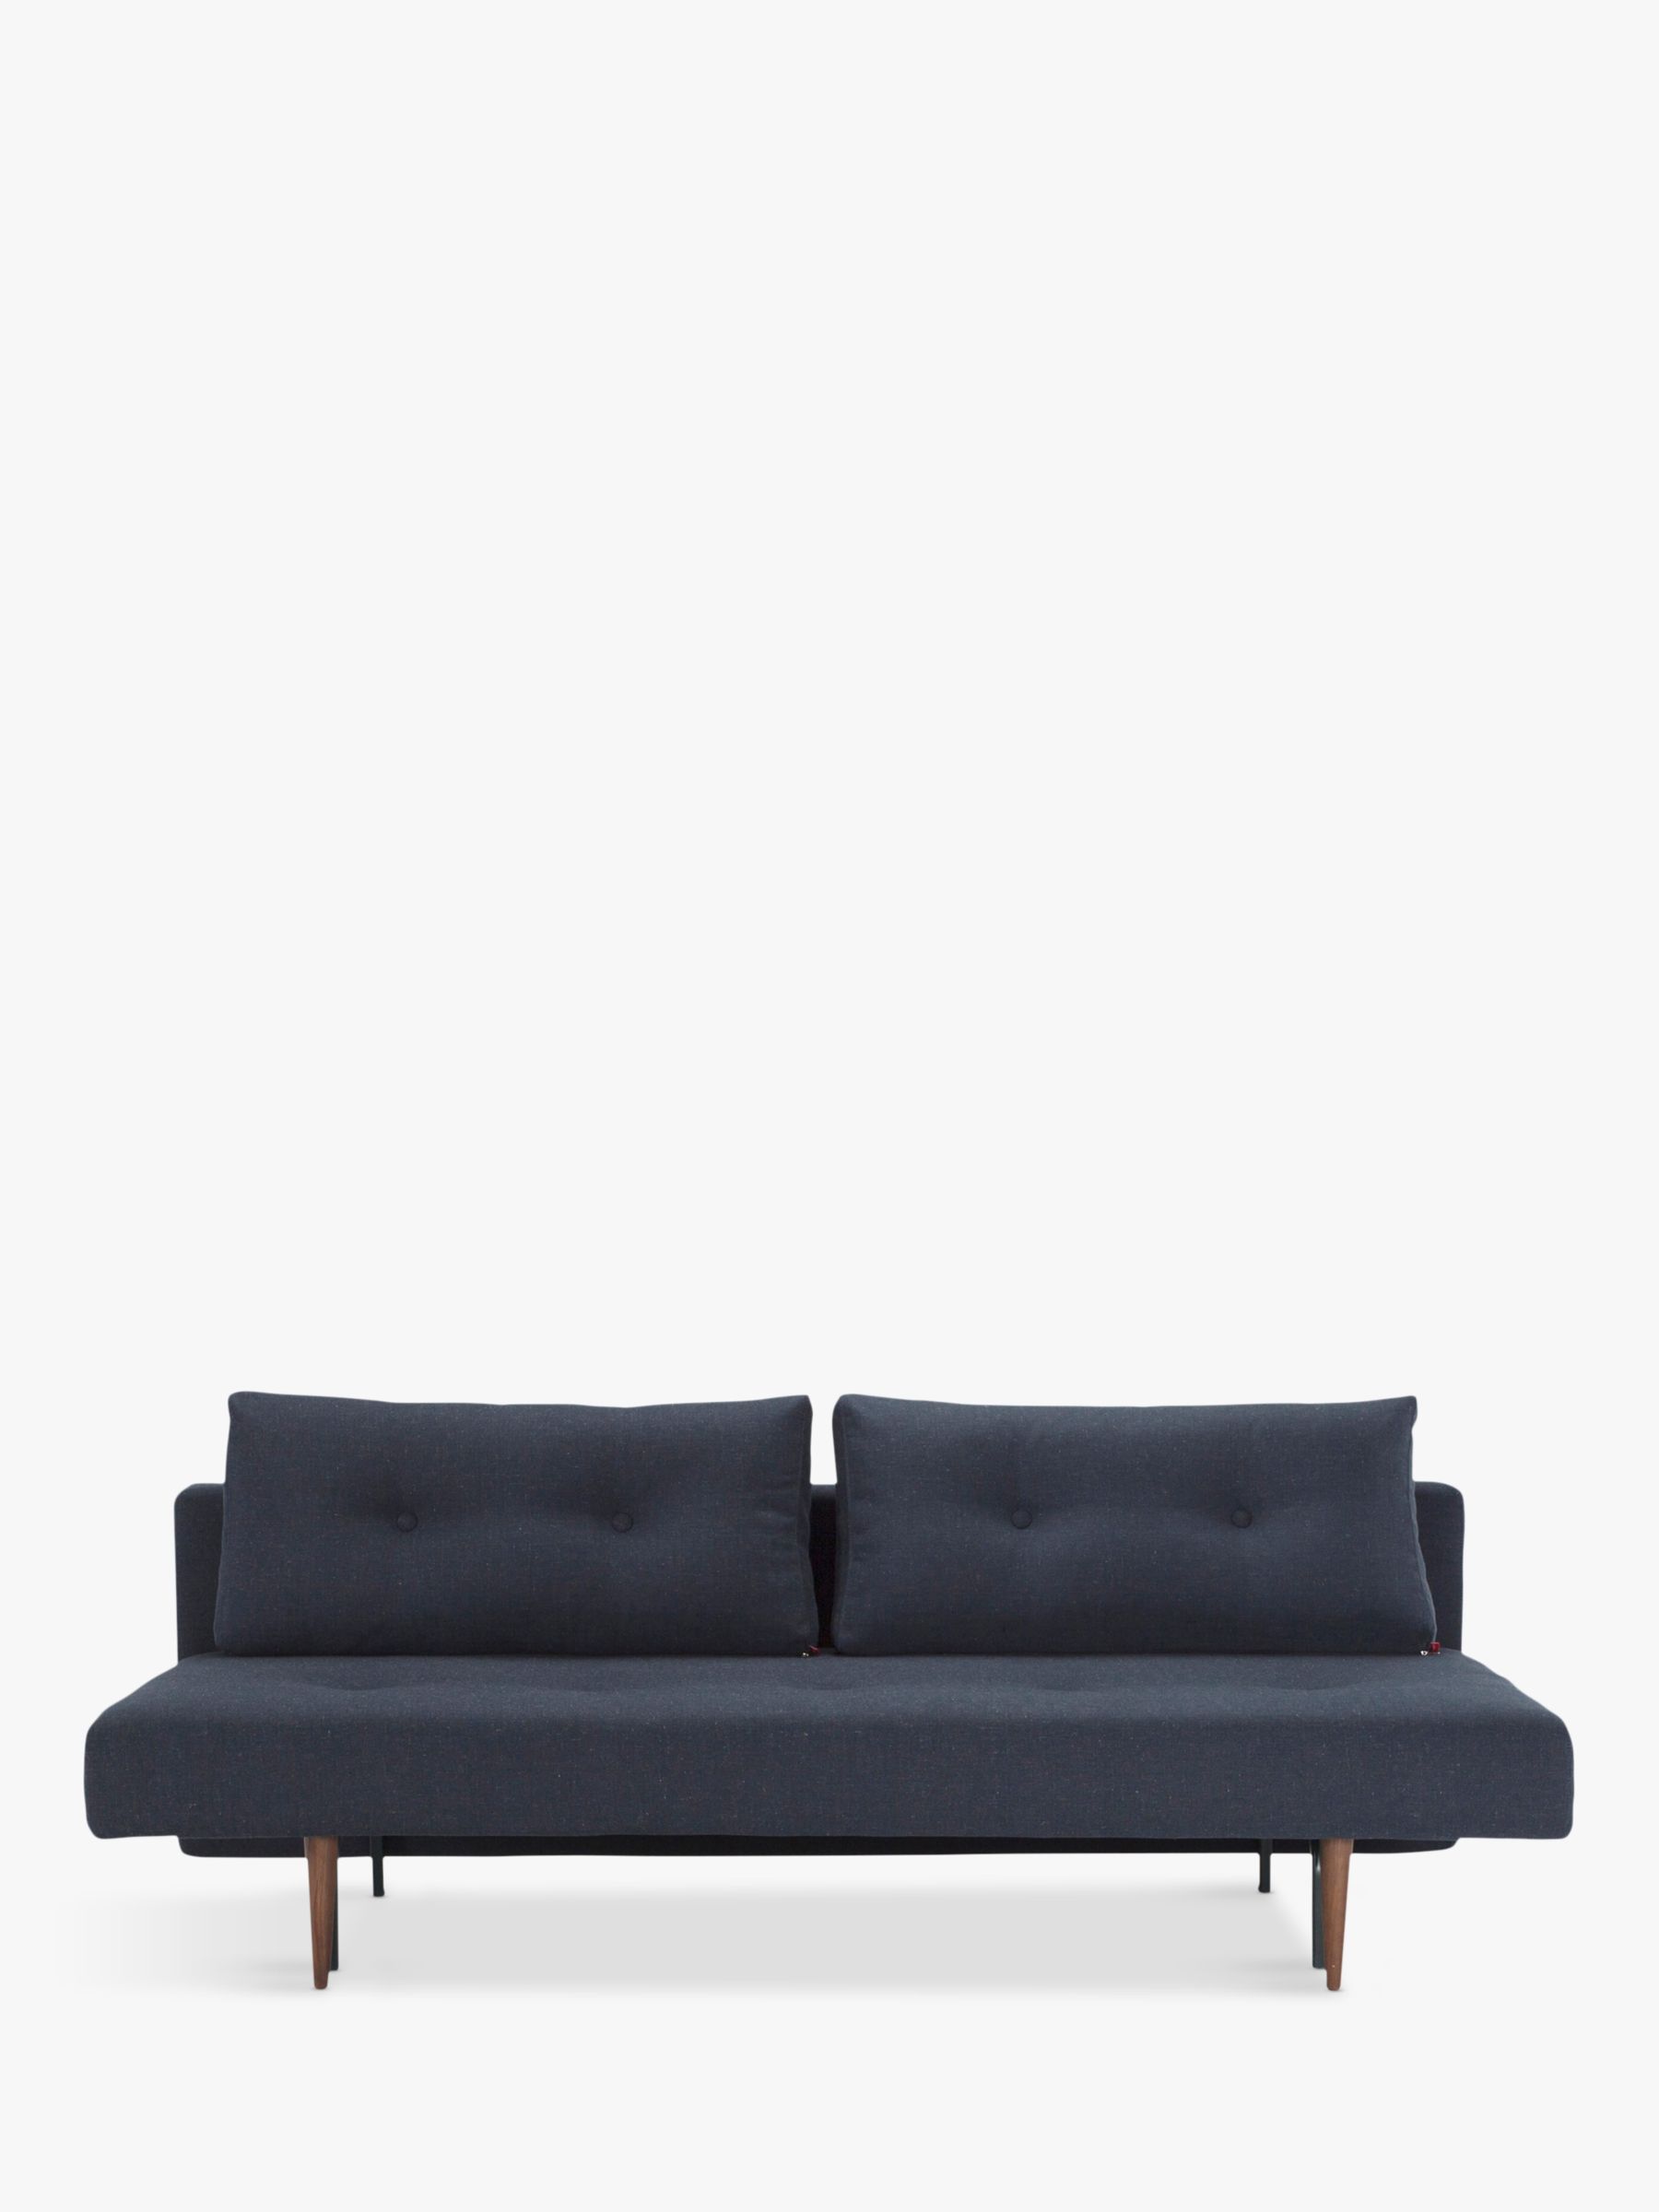 Recast Range, Innovation Living Recast Sofa Bed with Pocket Sprung Mattress, Dark Leg, Blue Nist